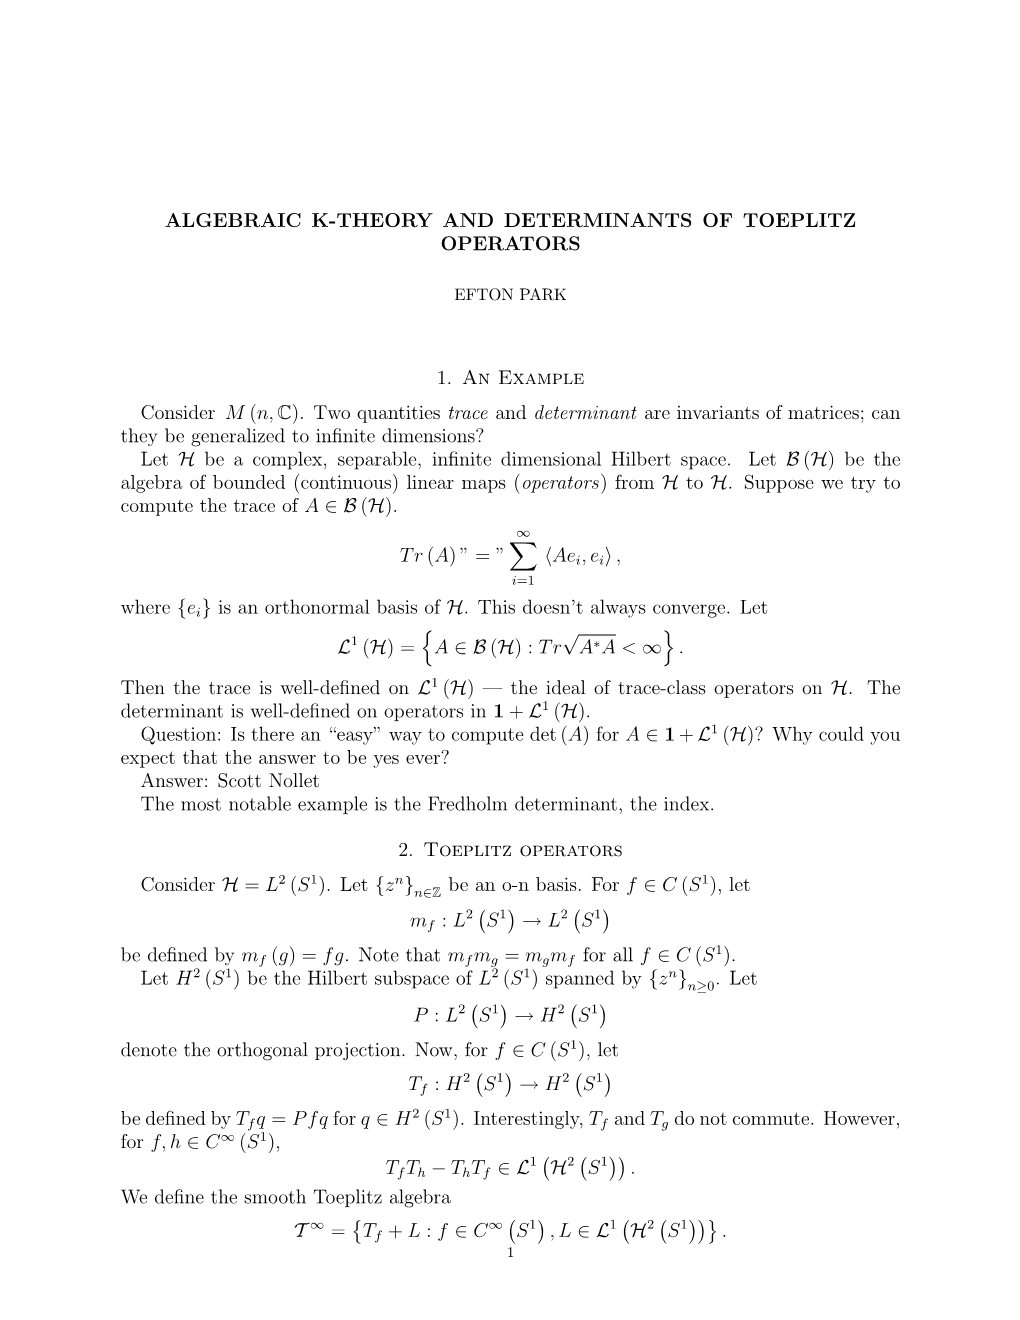 Algebraic K-Theory and Determinants of Toeplitz Operators